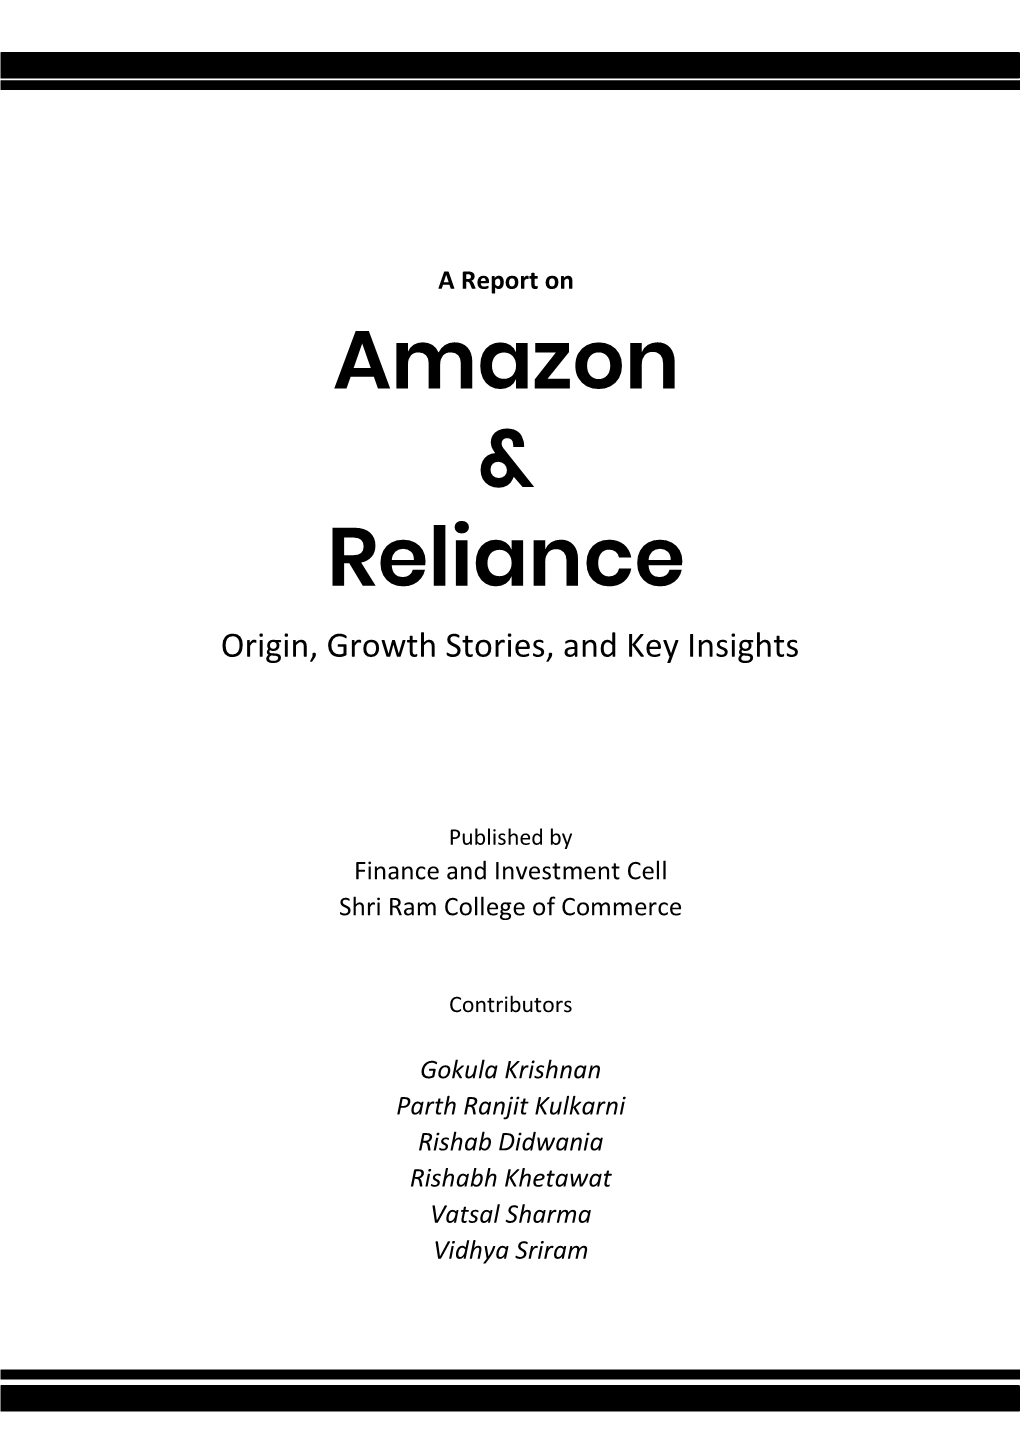 Amazon & Reliance